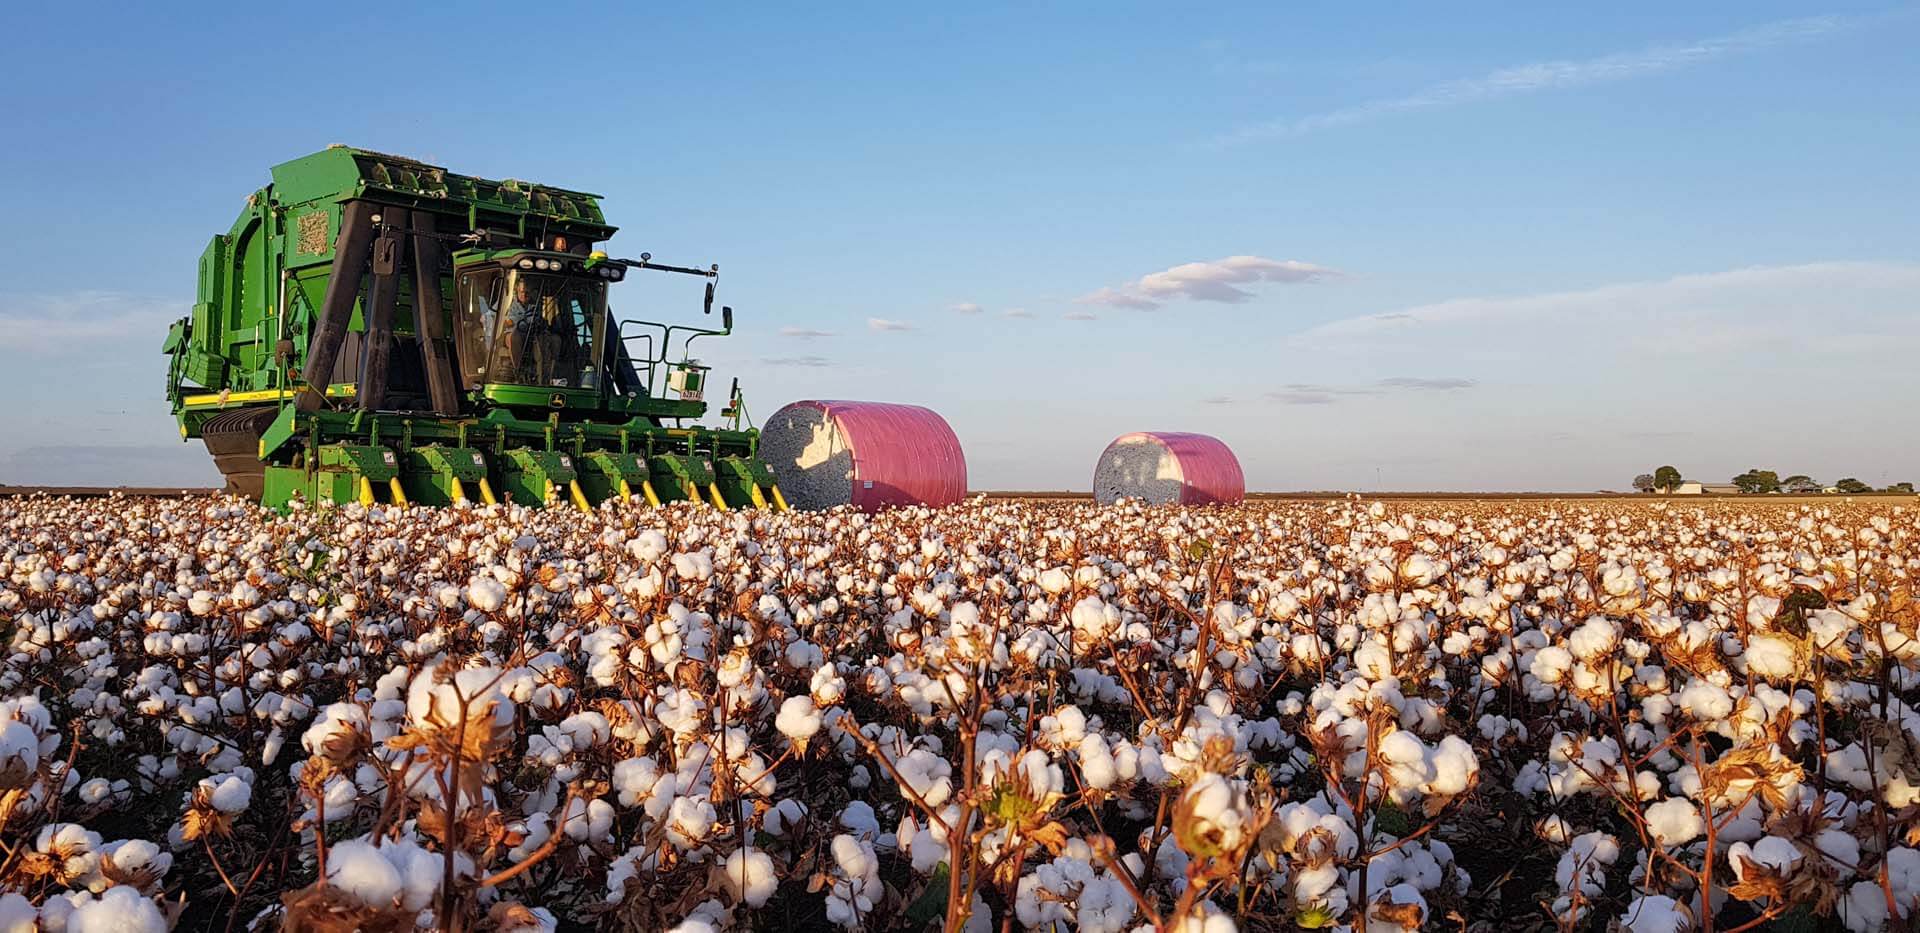 Baler in cotton field